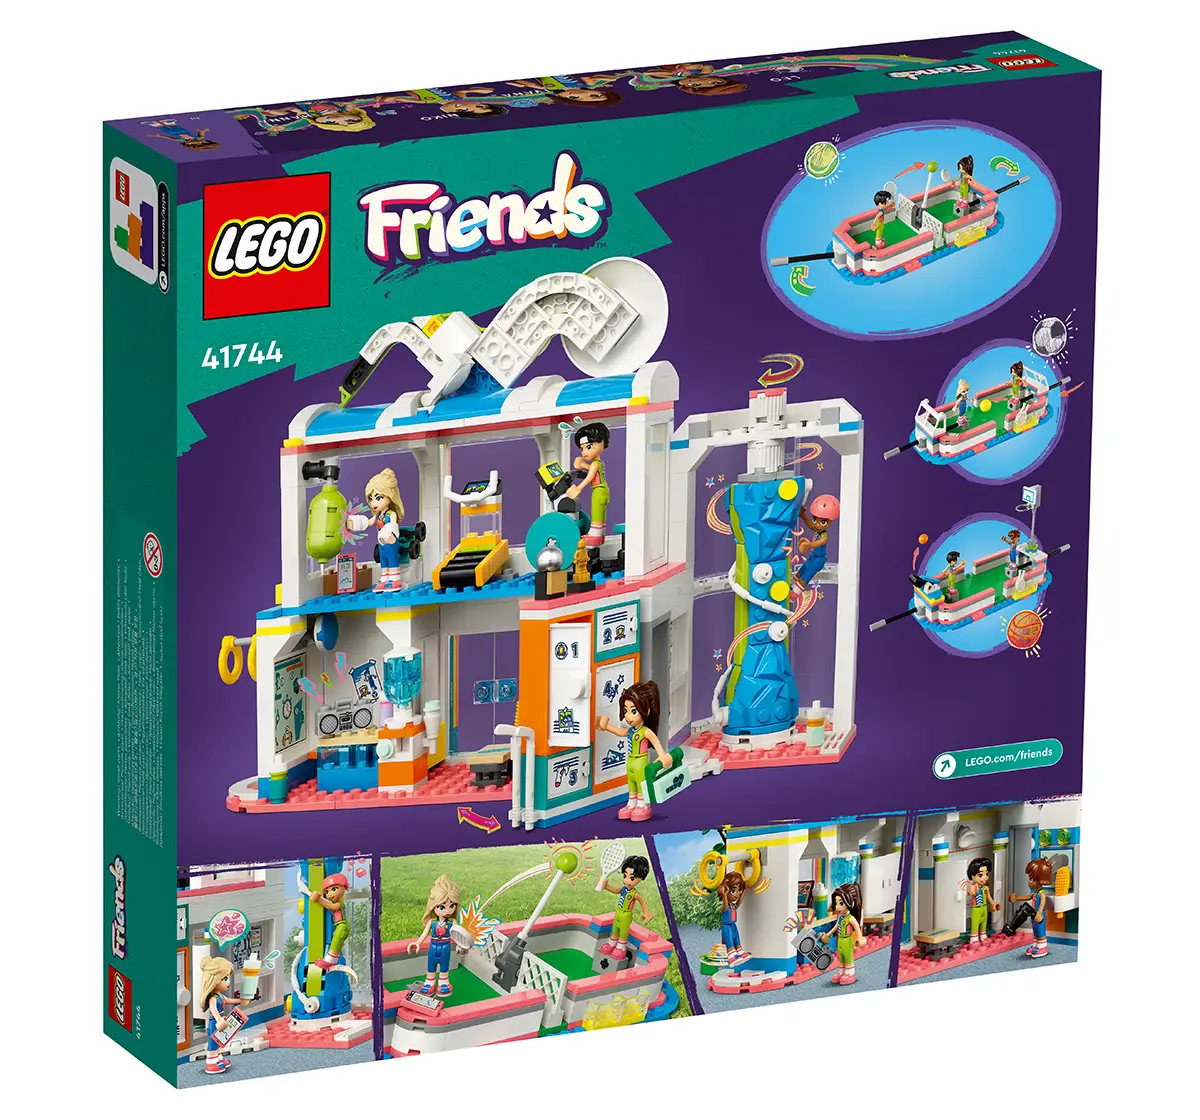 Lego Friends Sports Center 41744 Building Toy Set (832 Pieces), 8Y+